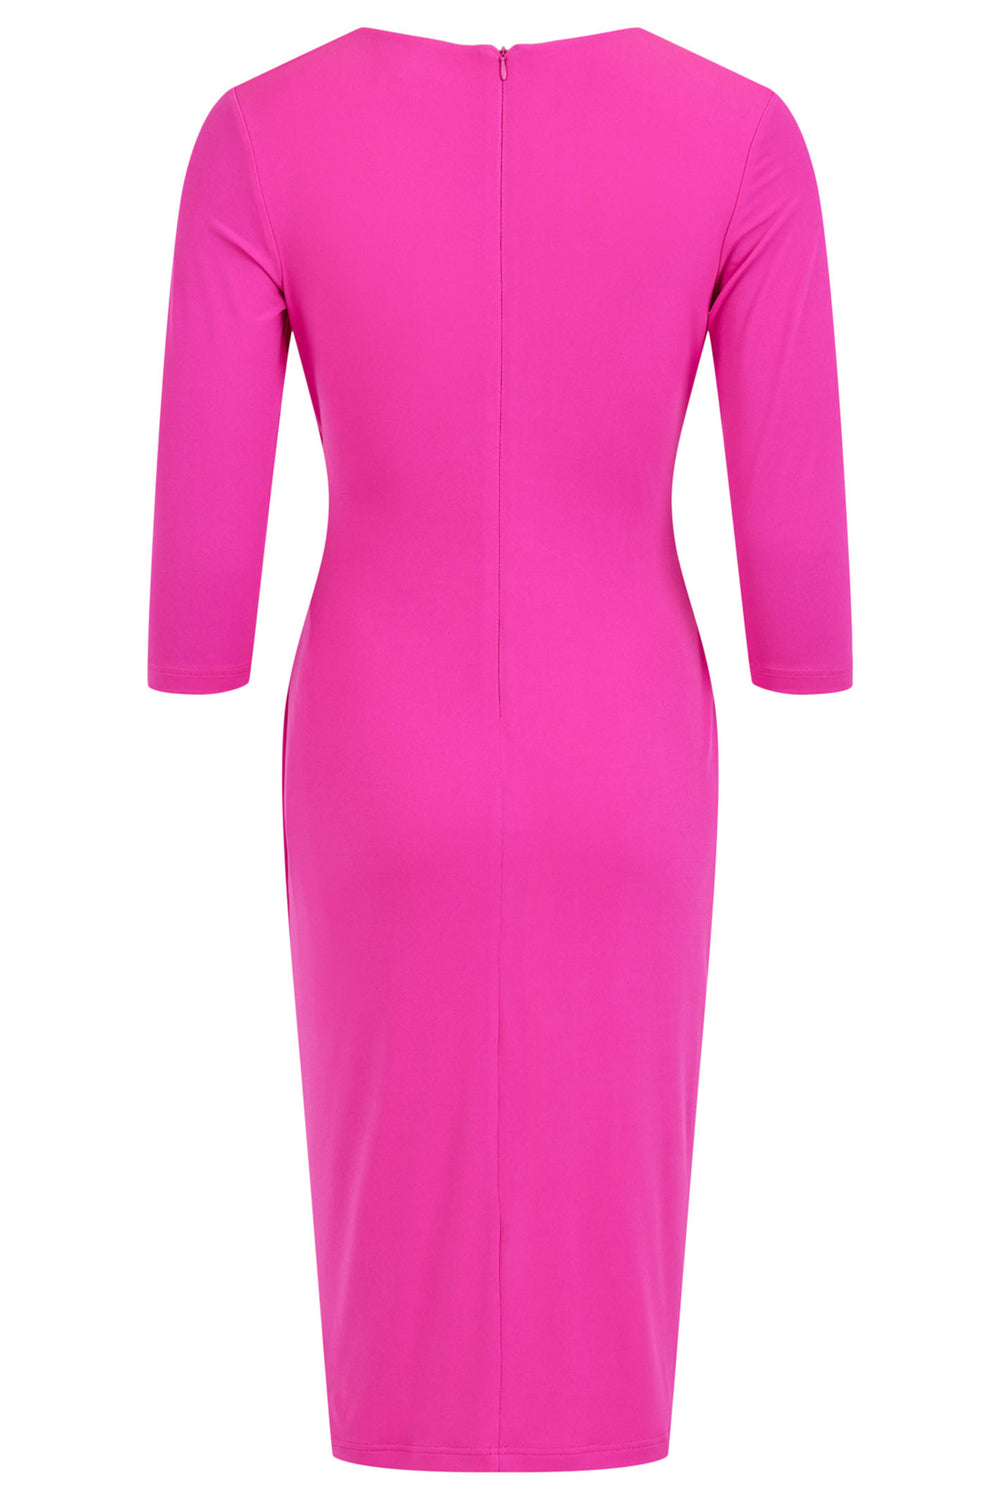 Tia 78336 709333 Cerise Pink Ruched Front Dress - Dotique